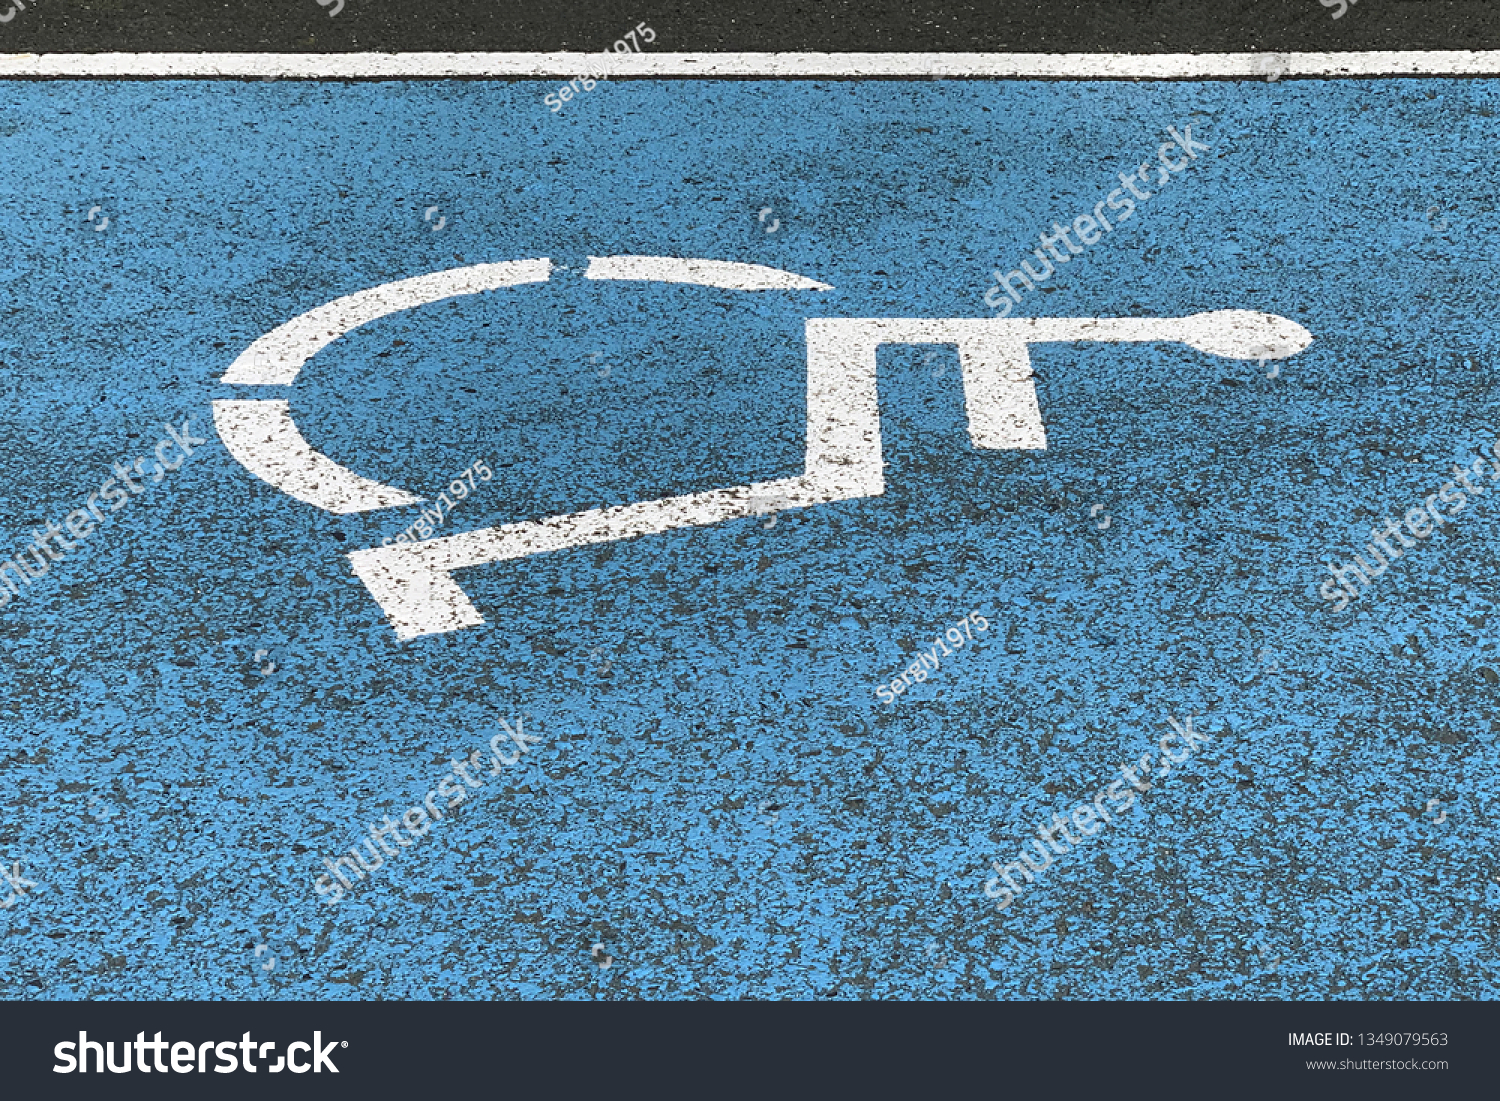 image of sign parking for the disabled on asphalt, close-up #1349079563